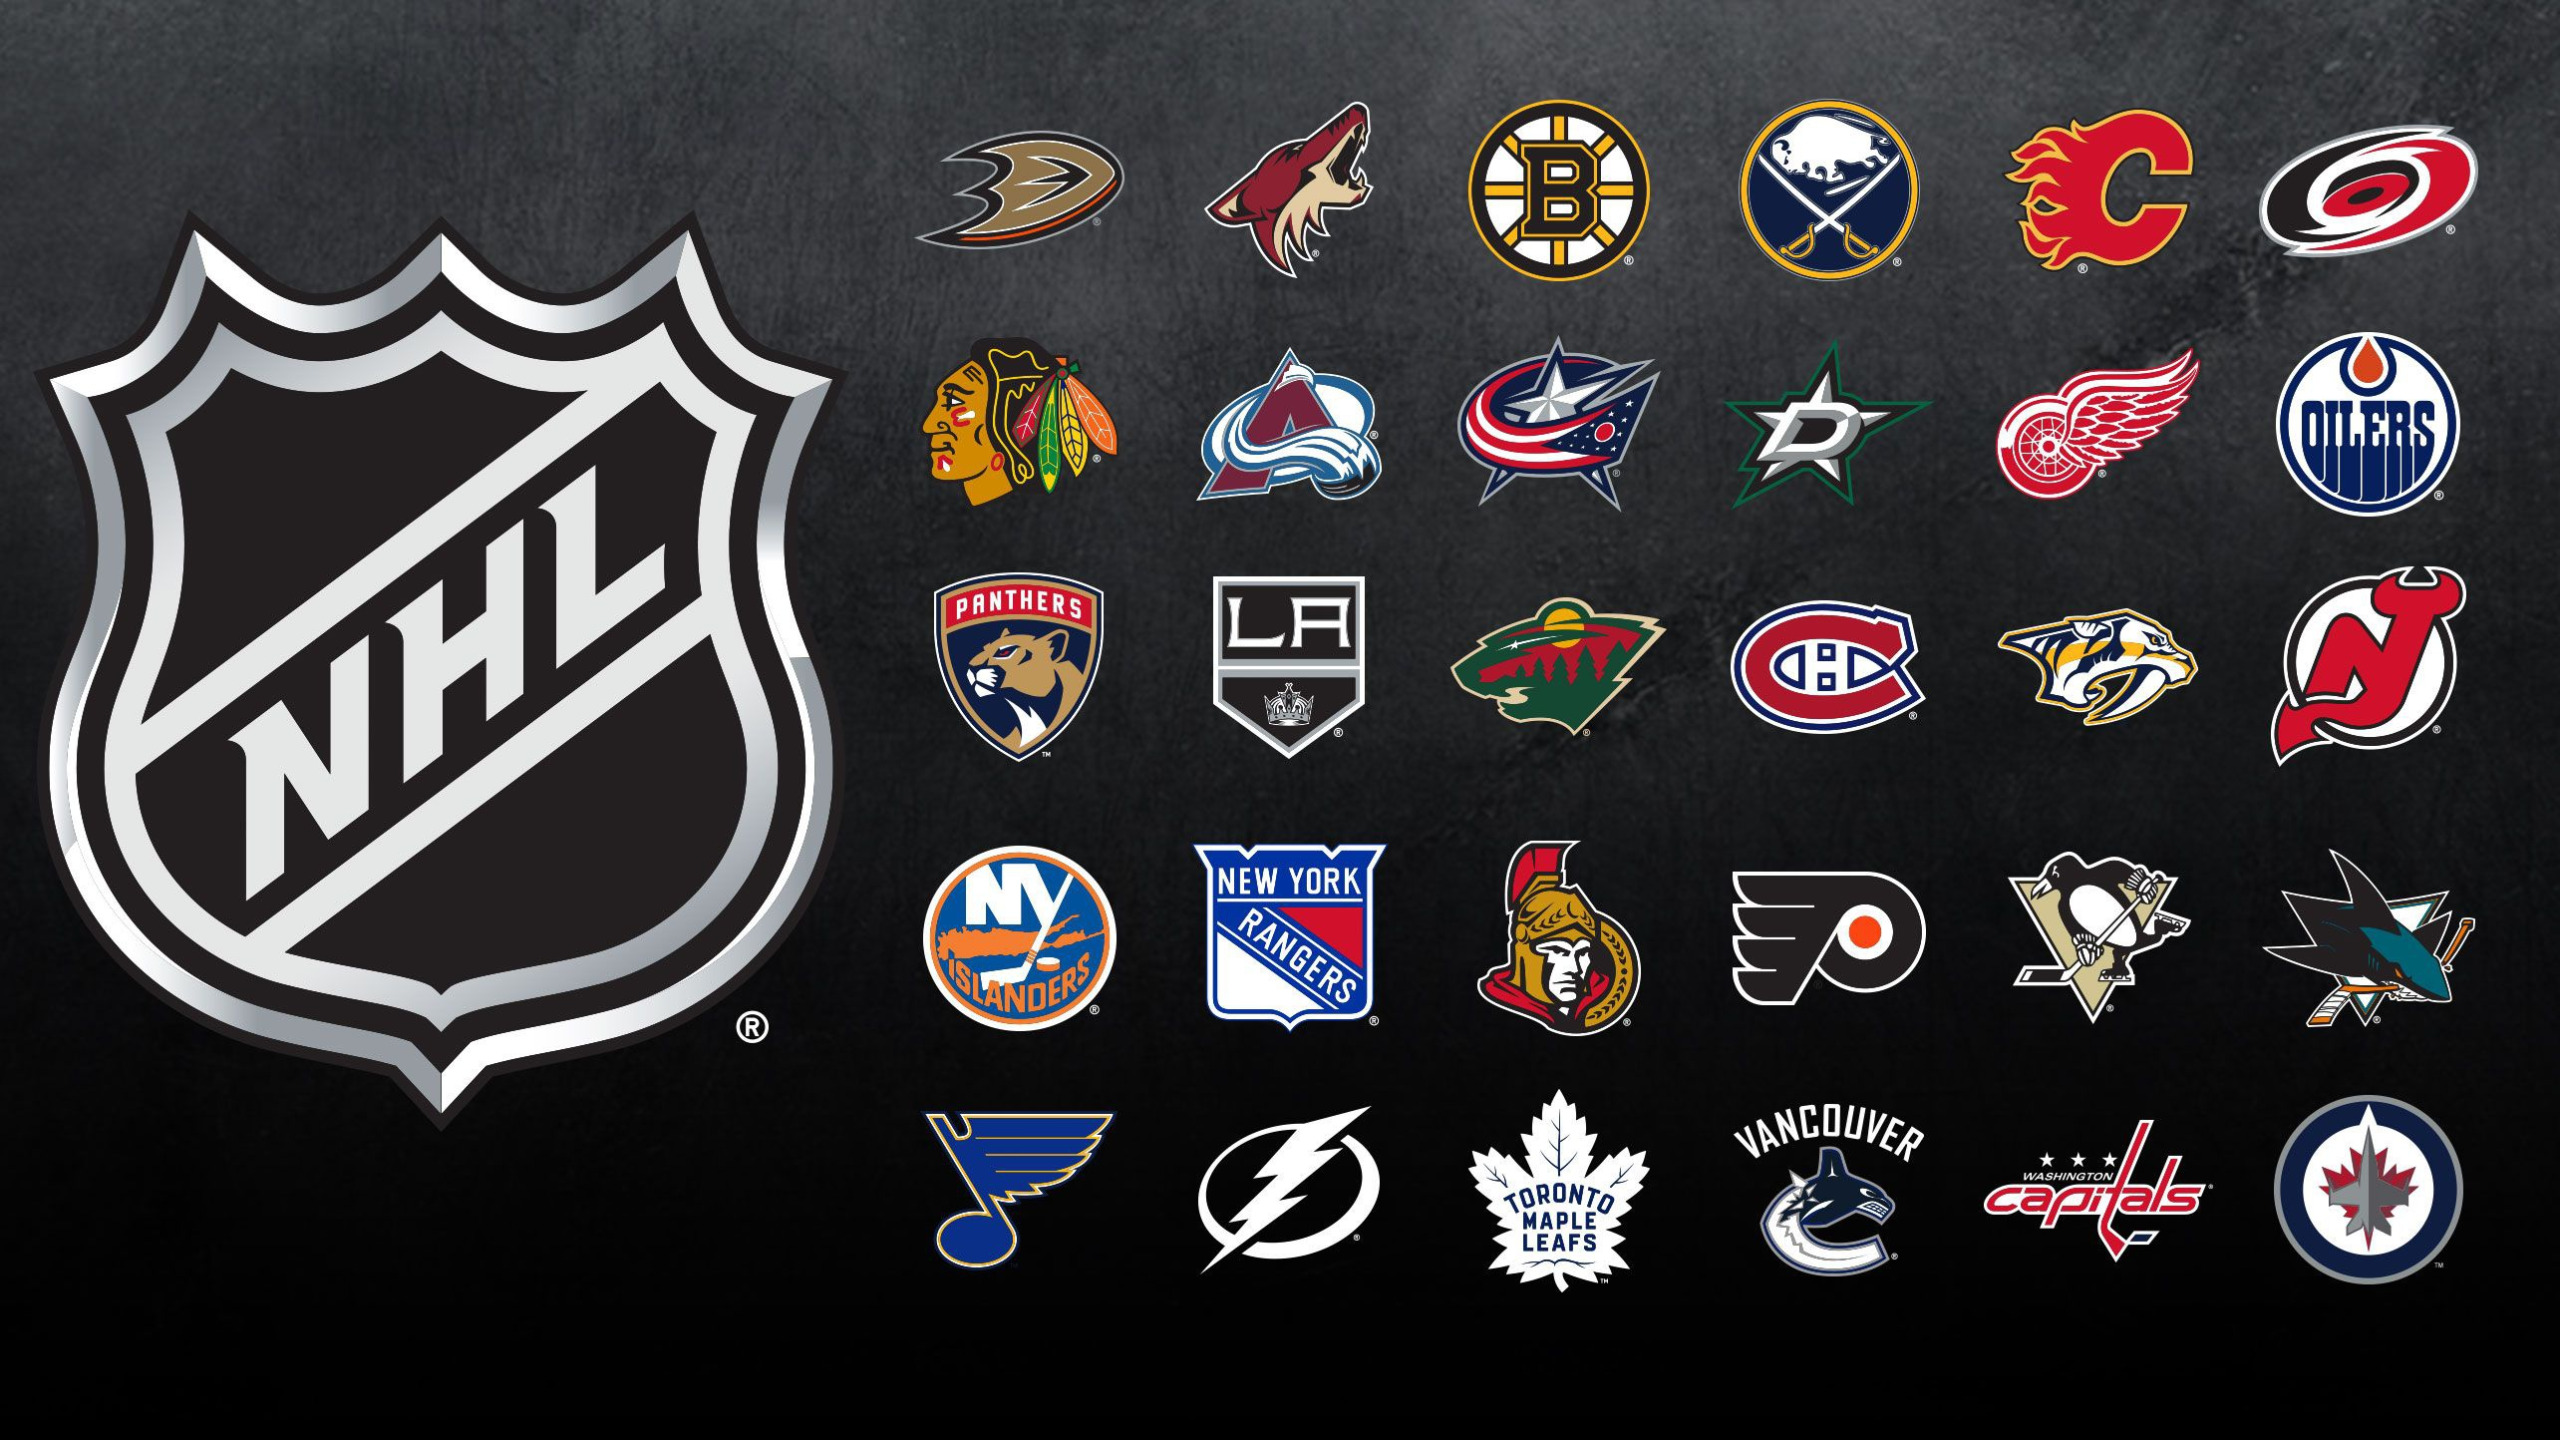 Nhl liga pro. Эмблемы клубов НХЛ. Логотипы хоккейных команд НХЛ. Эмблемы хоккейных клубов НХЛ С названиями. Хоккейные команды NHL.